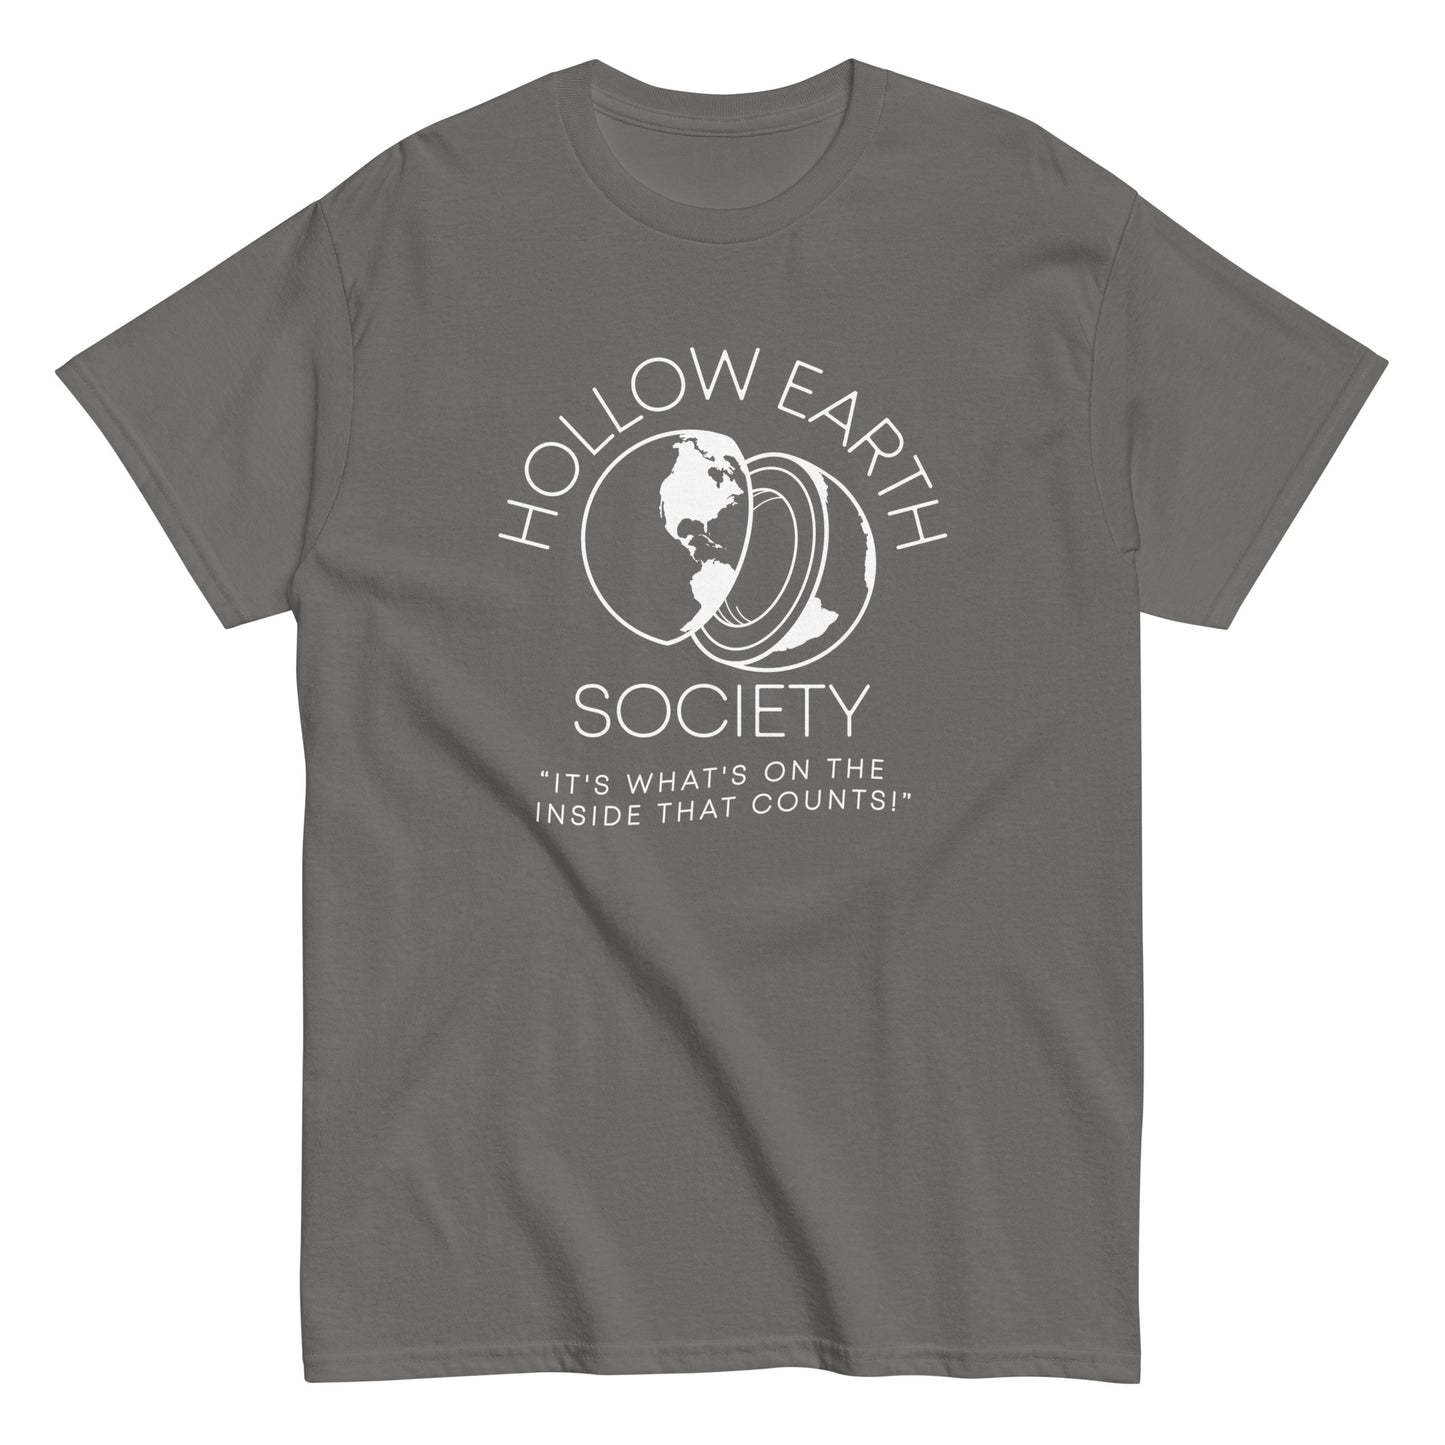 Hollow Earth Society Men's Classic Tee